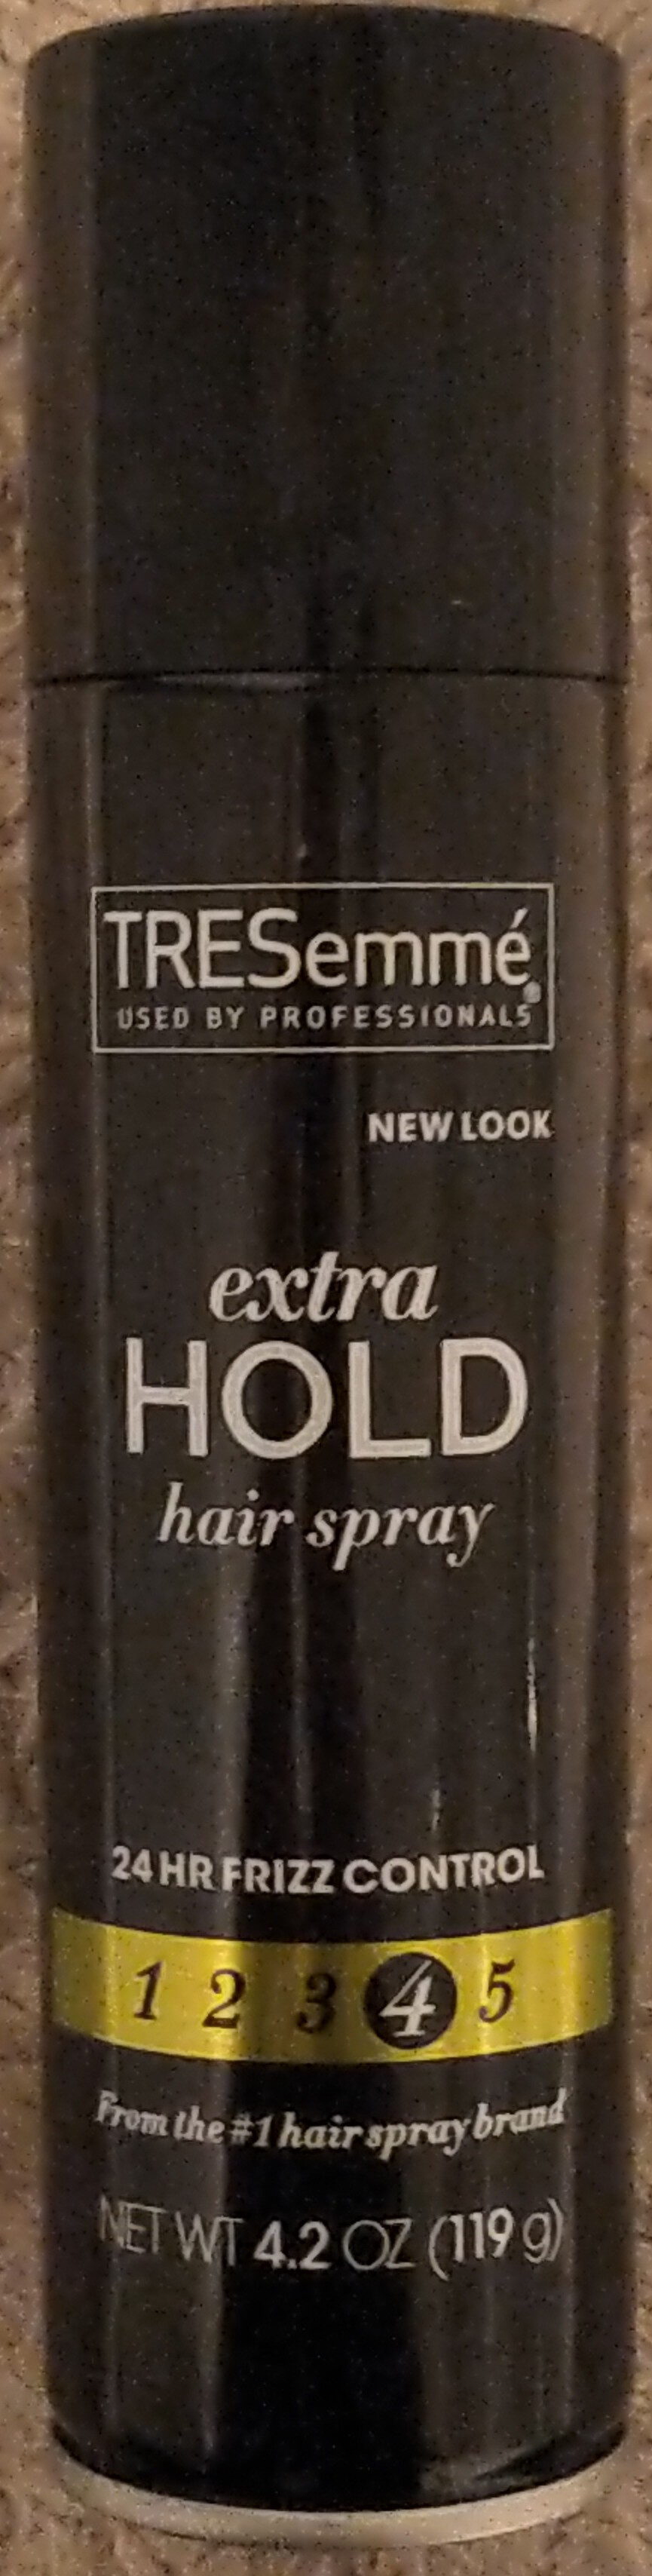 Extra Hold Hairspray - Produit - en